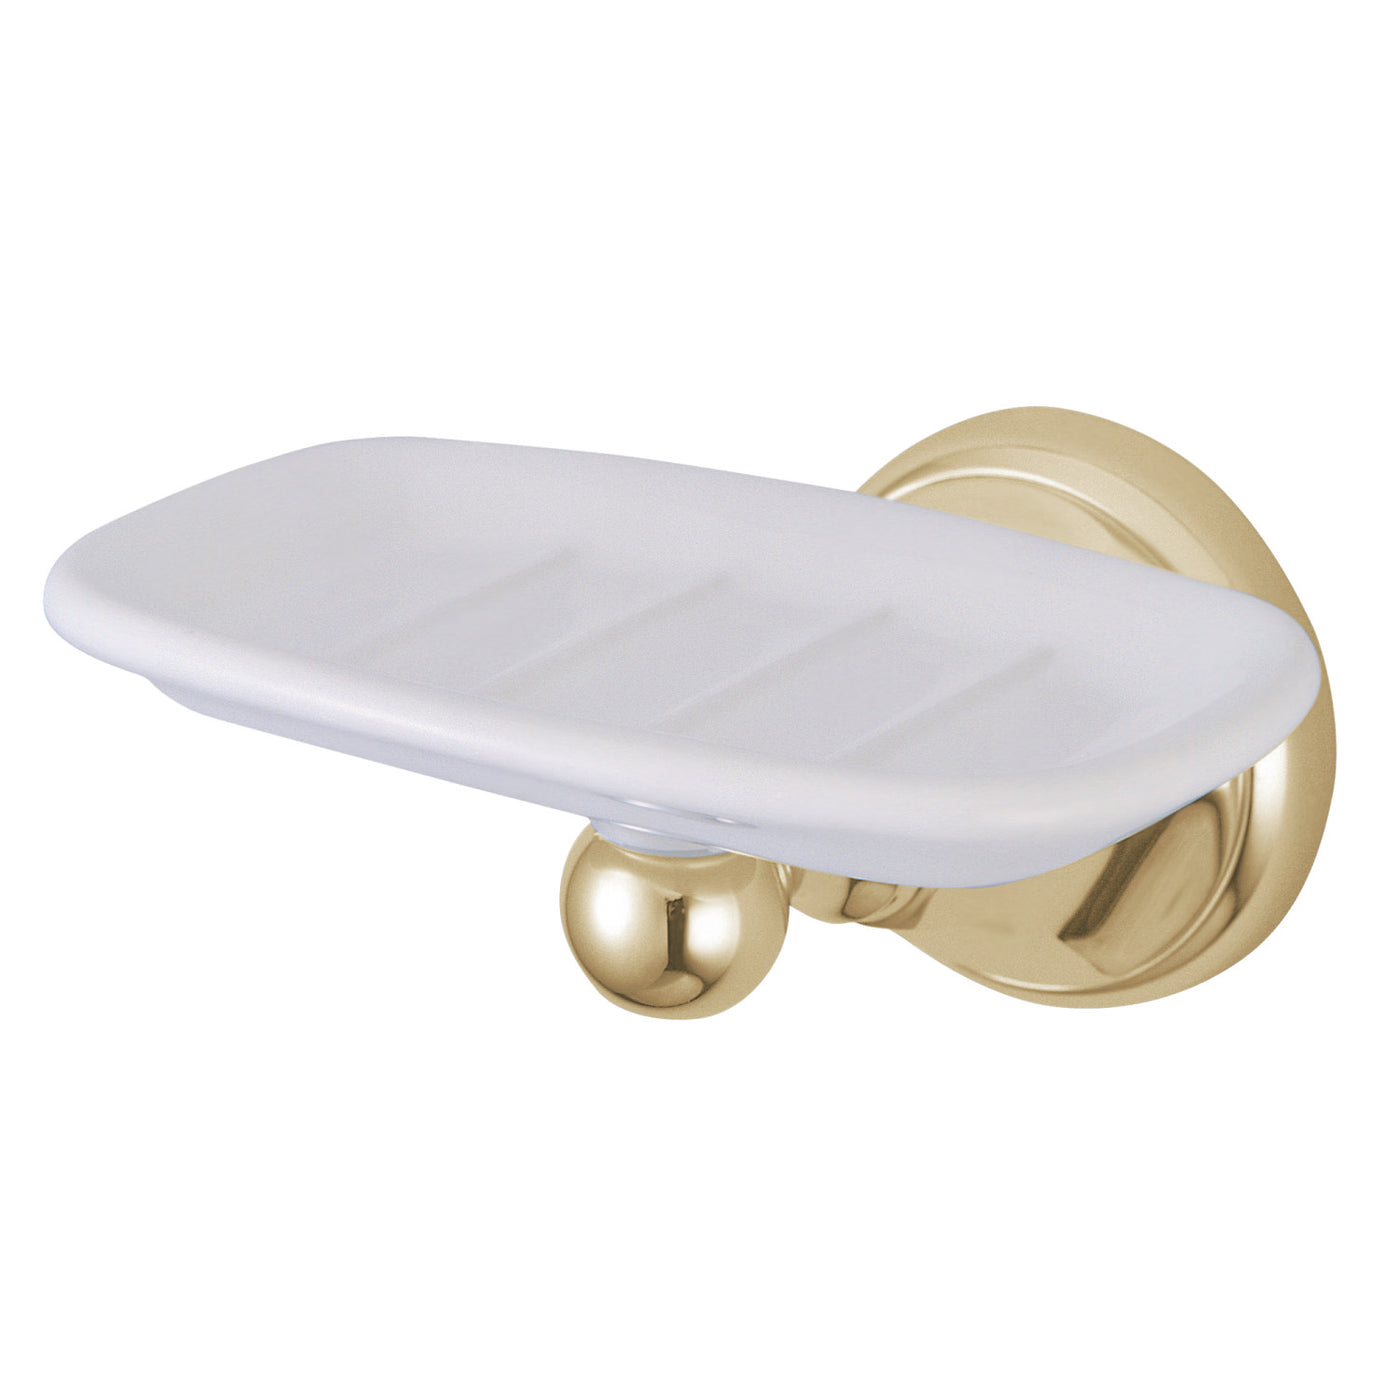 Elements of Design EBA4815PB Wall Mount Soap Dish Holder, Polished Brass